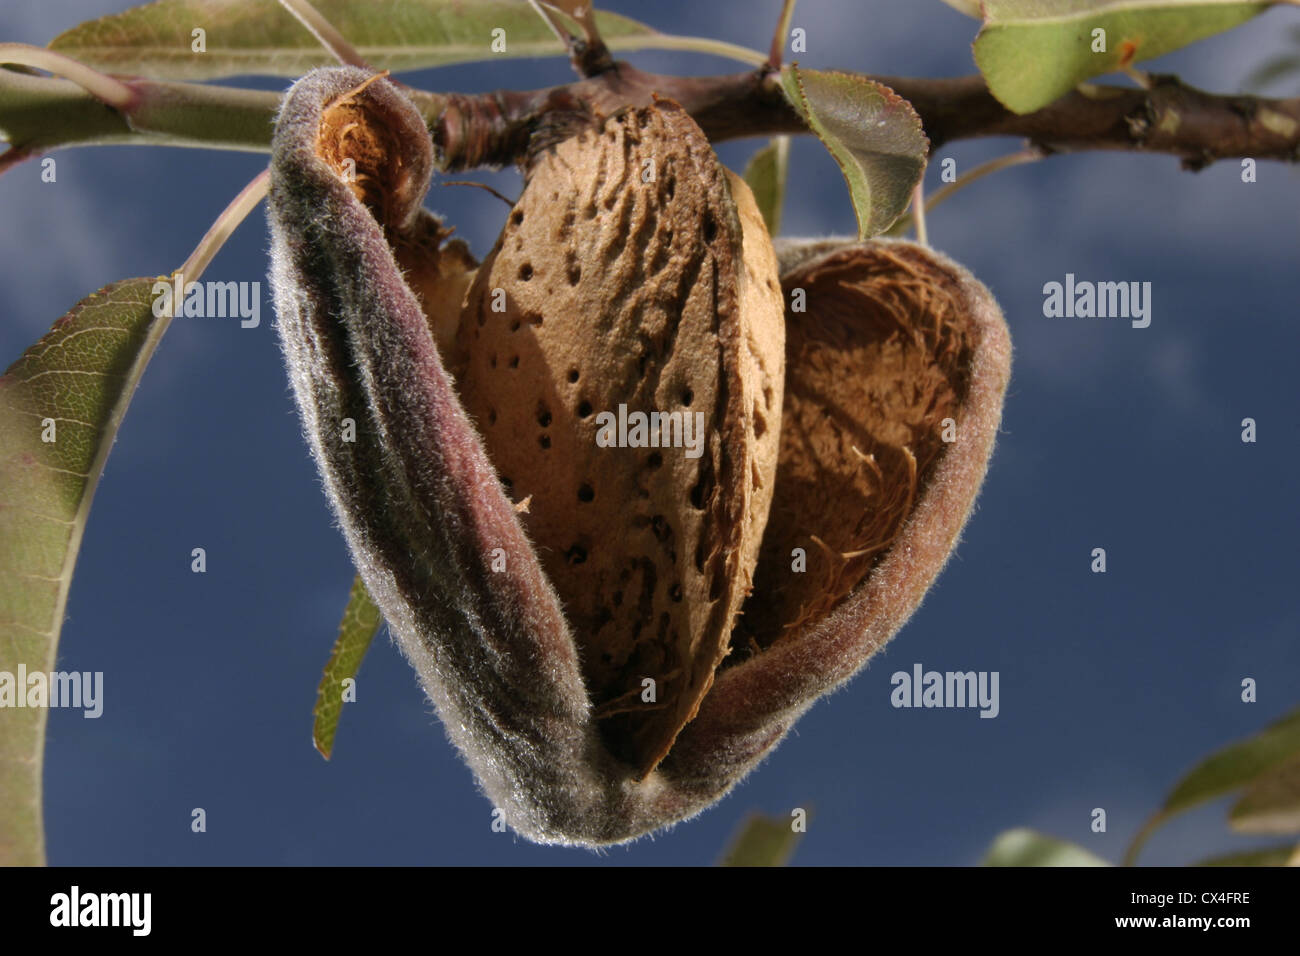 Picture: Steve Race - Mollar almonds (Prunus dulcis) ripen on the tree, Catalunya, Spain. Stock Photo